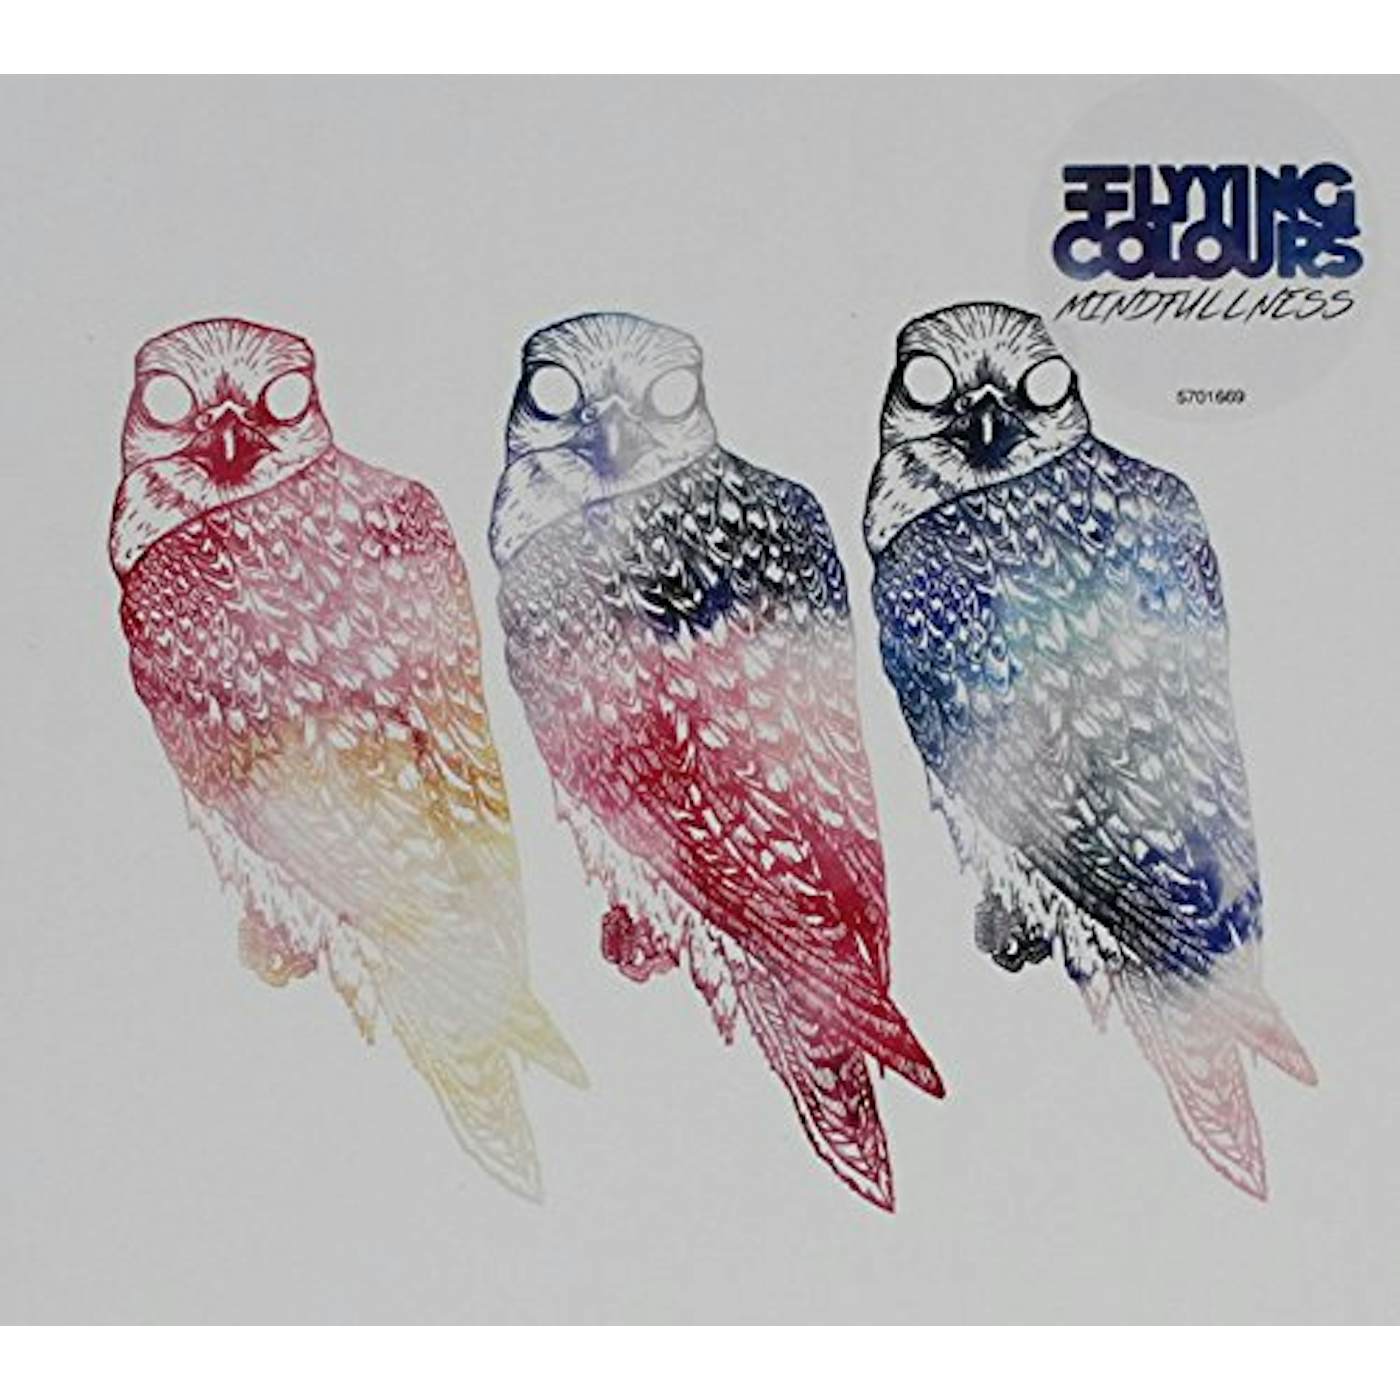 Flyying Colours MINDFULLNESS CD